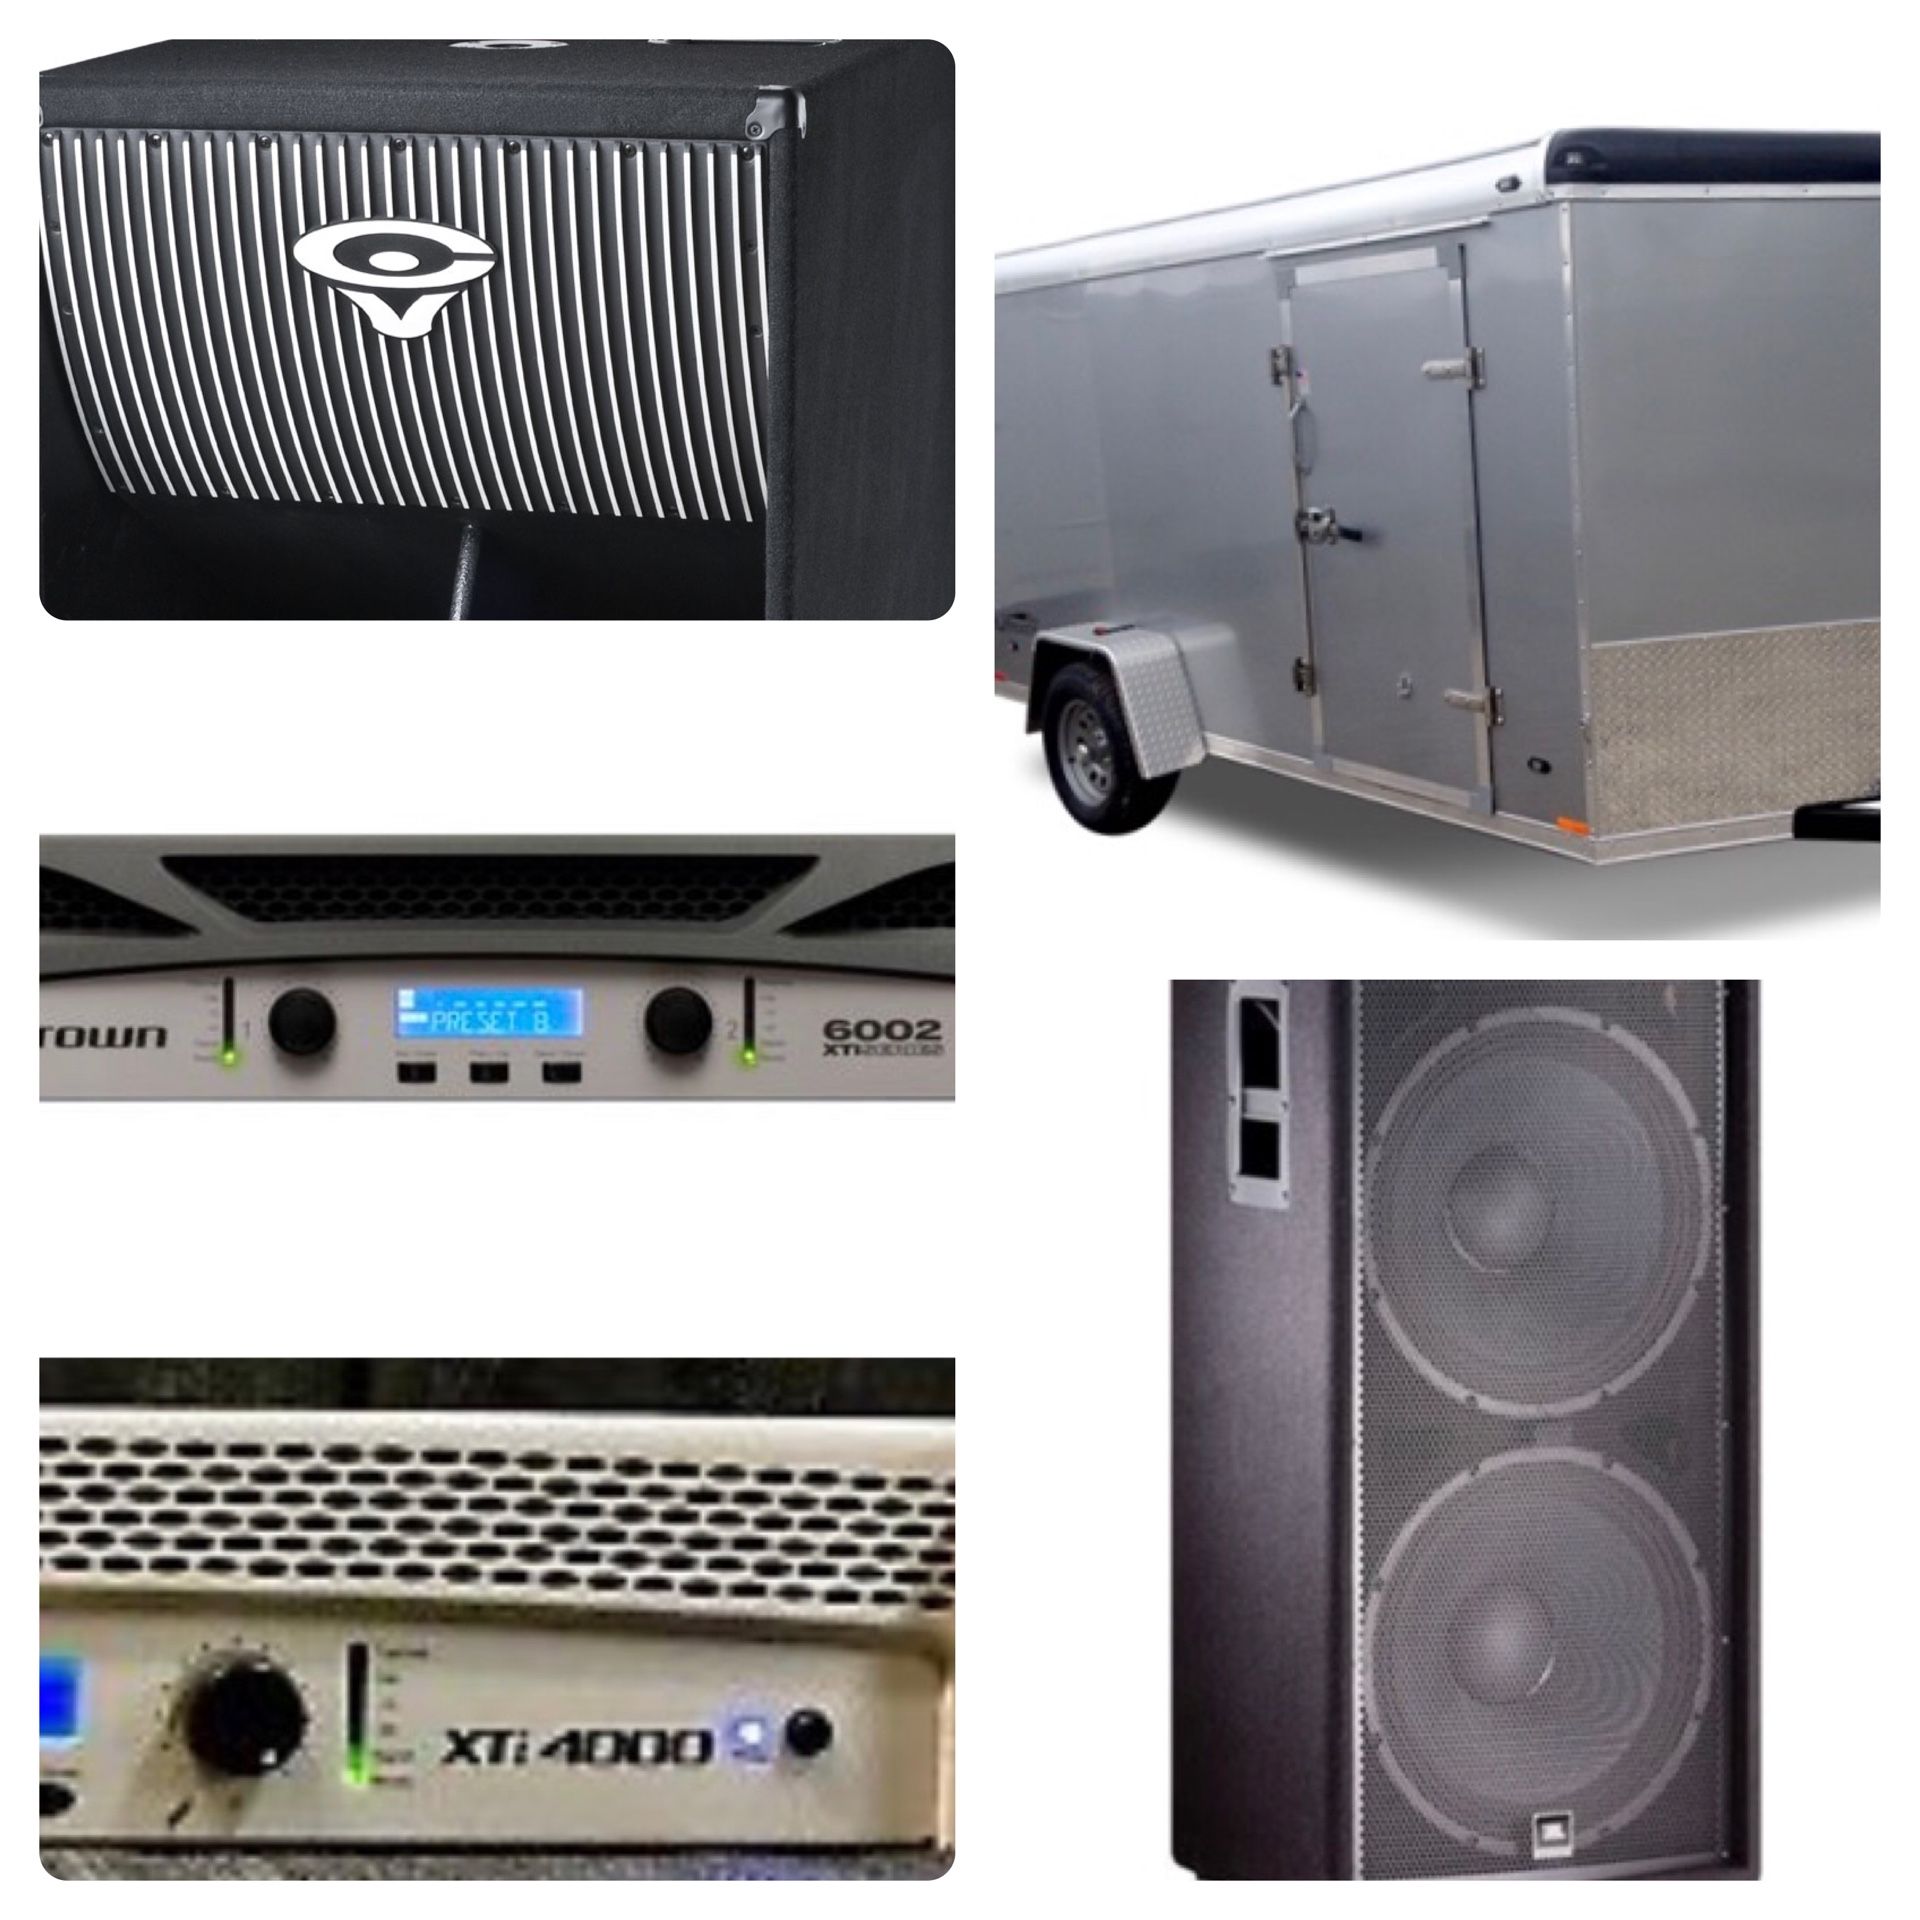 Dj Pro Audio Equipment and Trailer